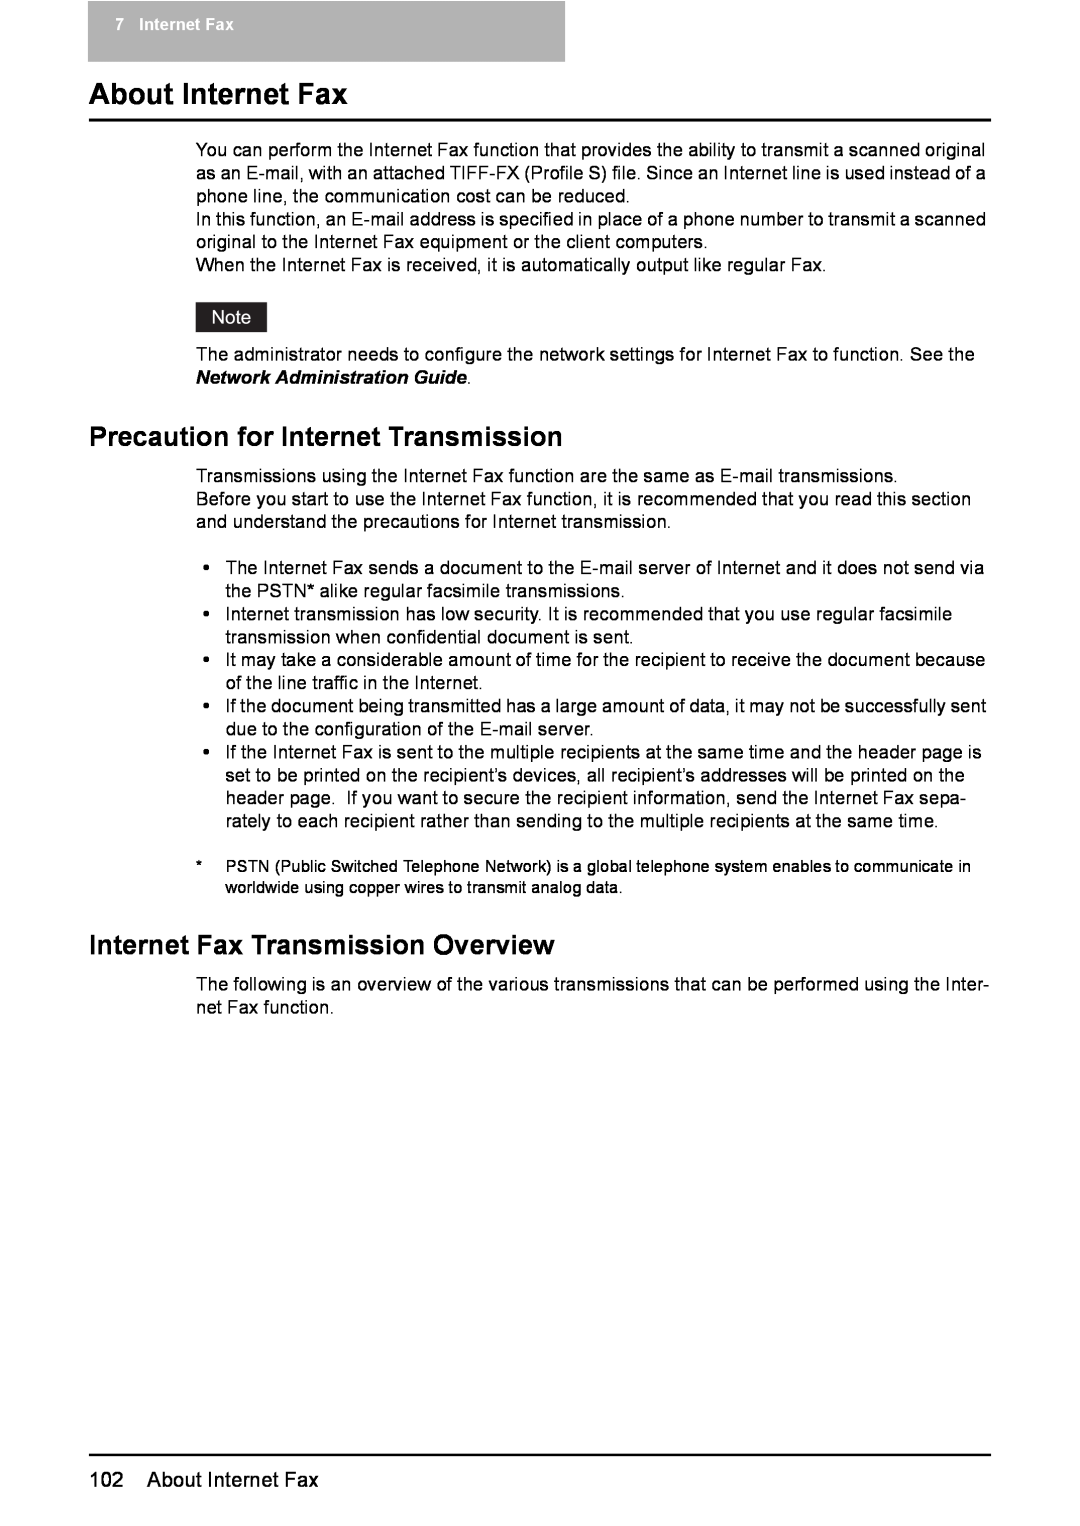 Toshiba 3510C, 3500C, 2500C About Internet Fax, Precaution for Internet Transmission, Internet Fax Transmission Overview 